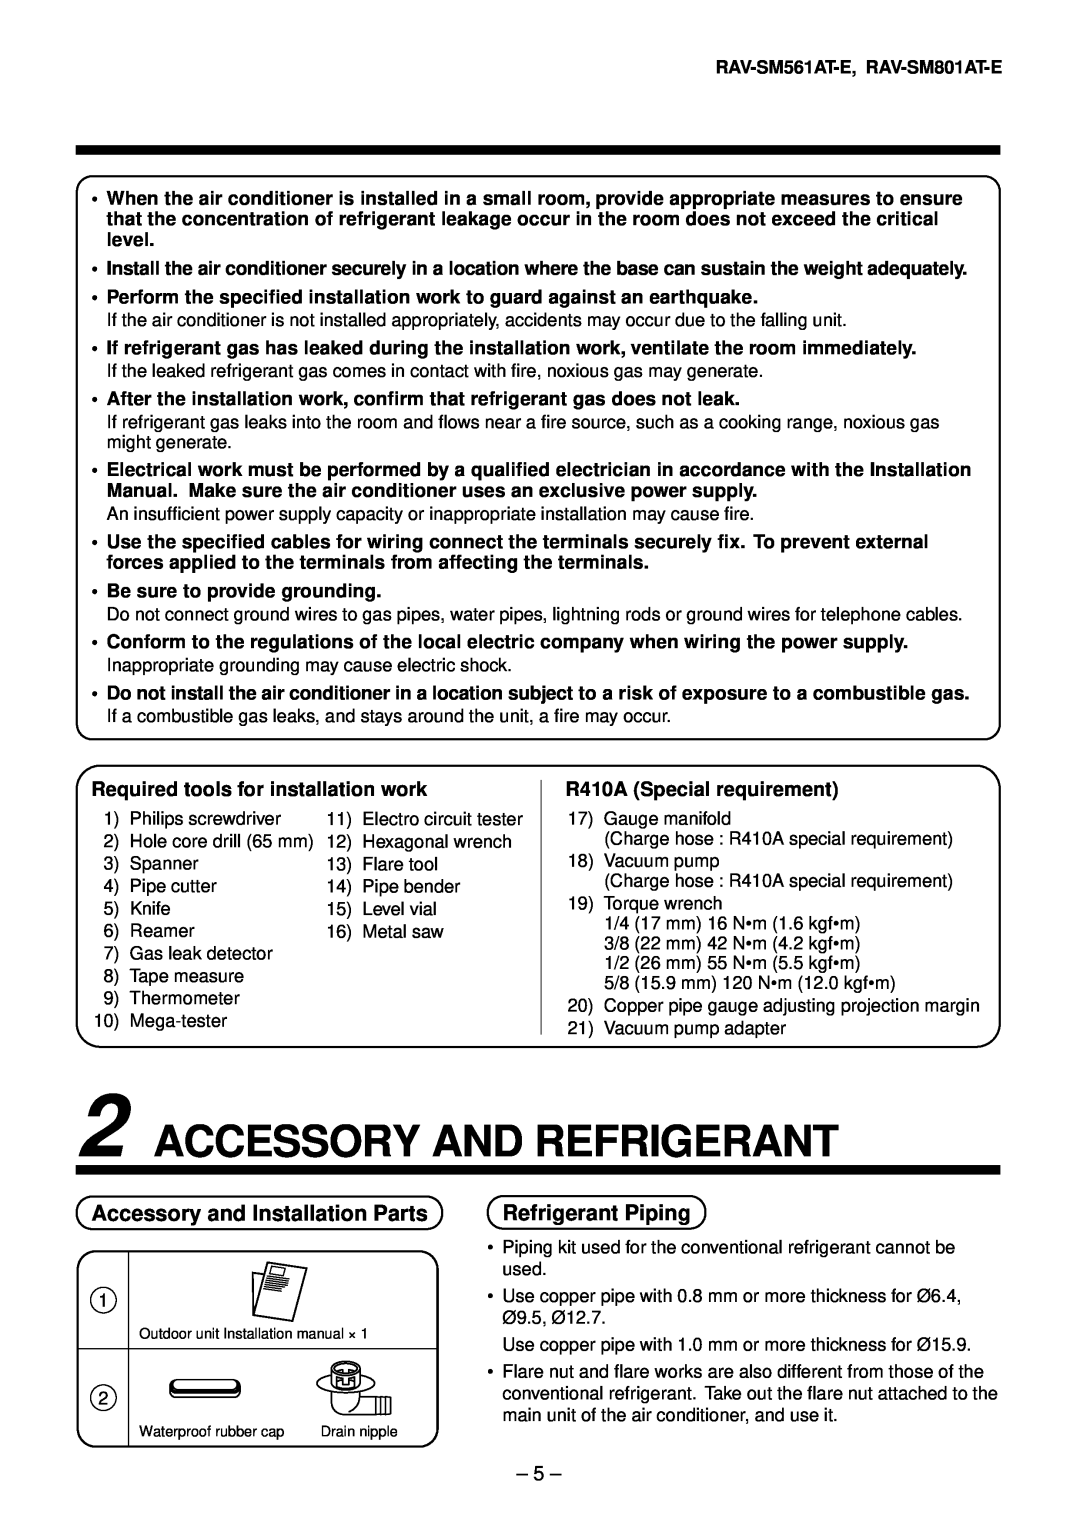 Toshiba RAV-SM1401AT-E, RAV-SM1101AT-E Accessory And Refrigerant, Accessory and Installation Parts, Refrigerant Piping 